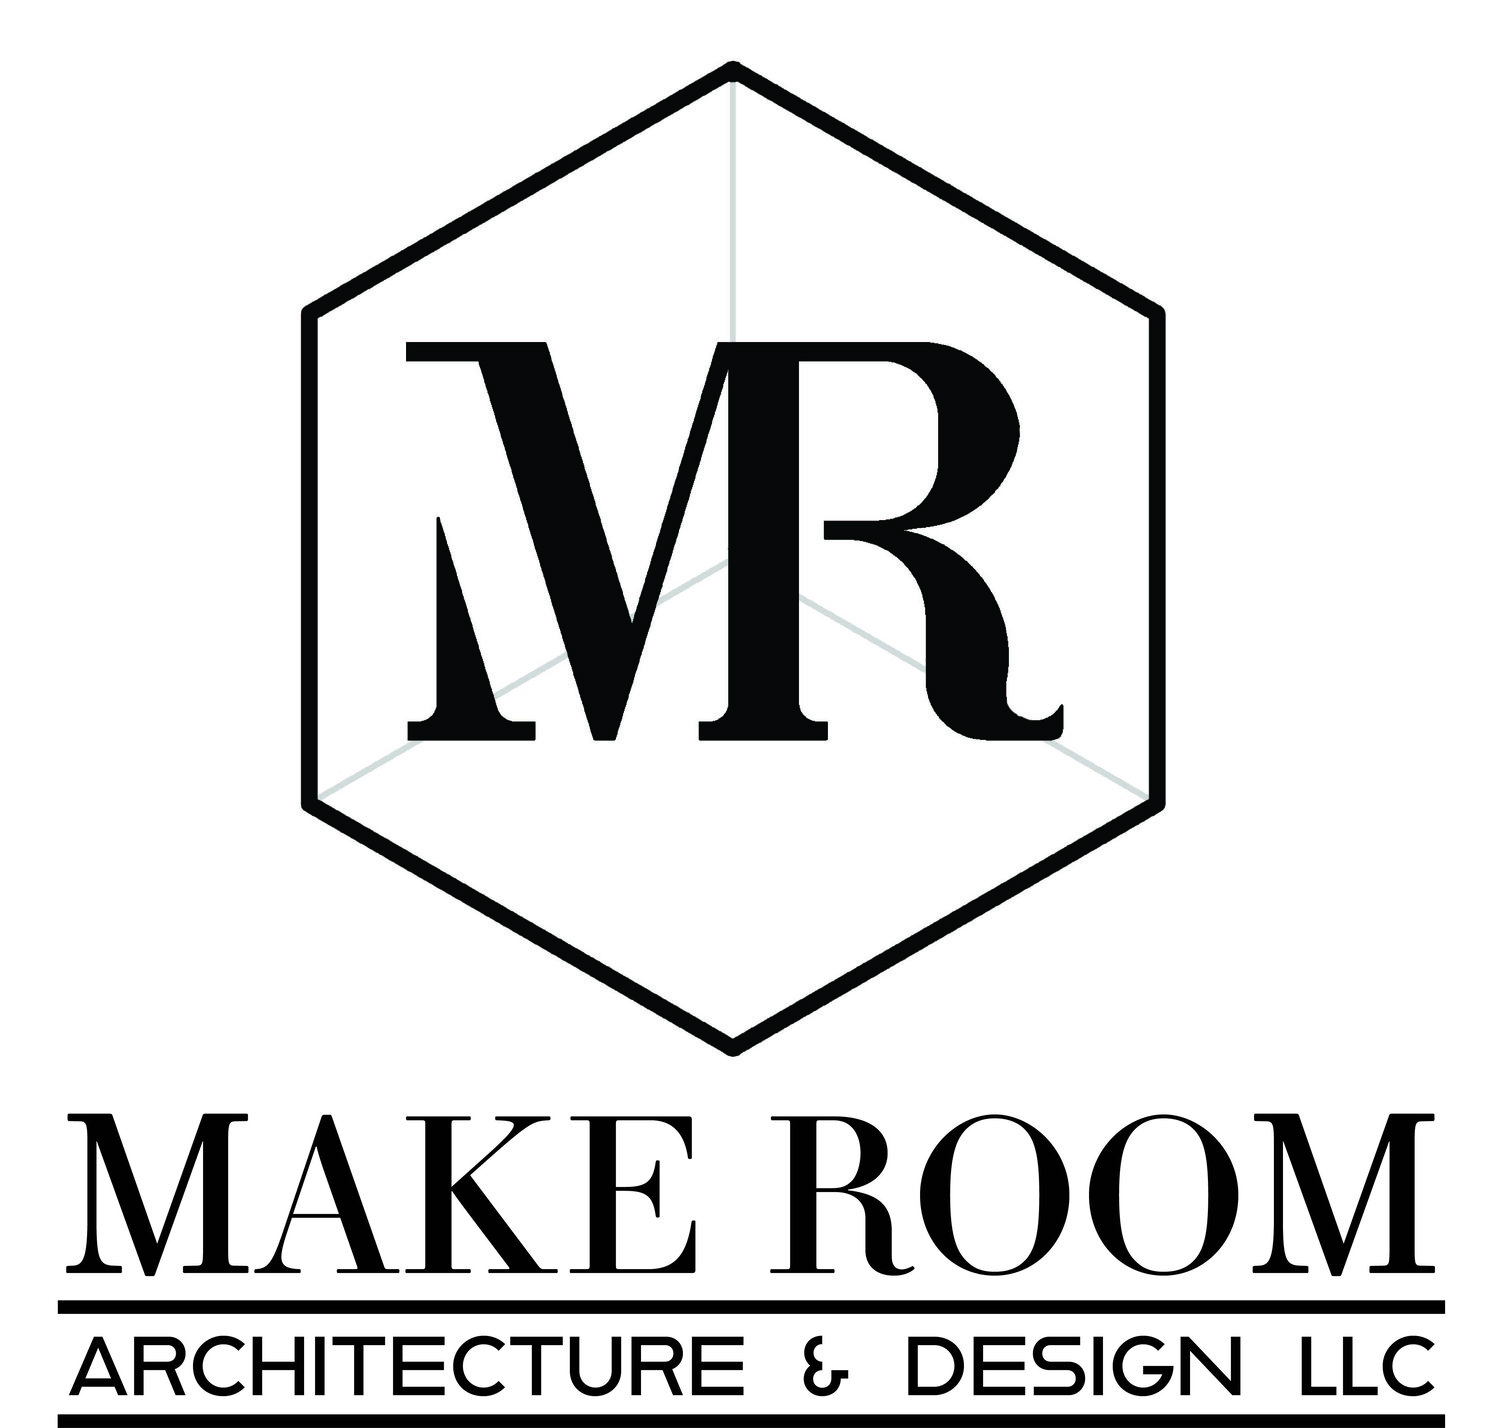 Make Room Architecture and Design